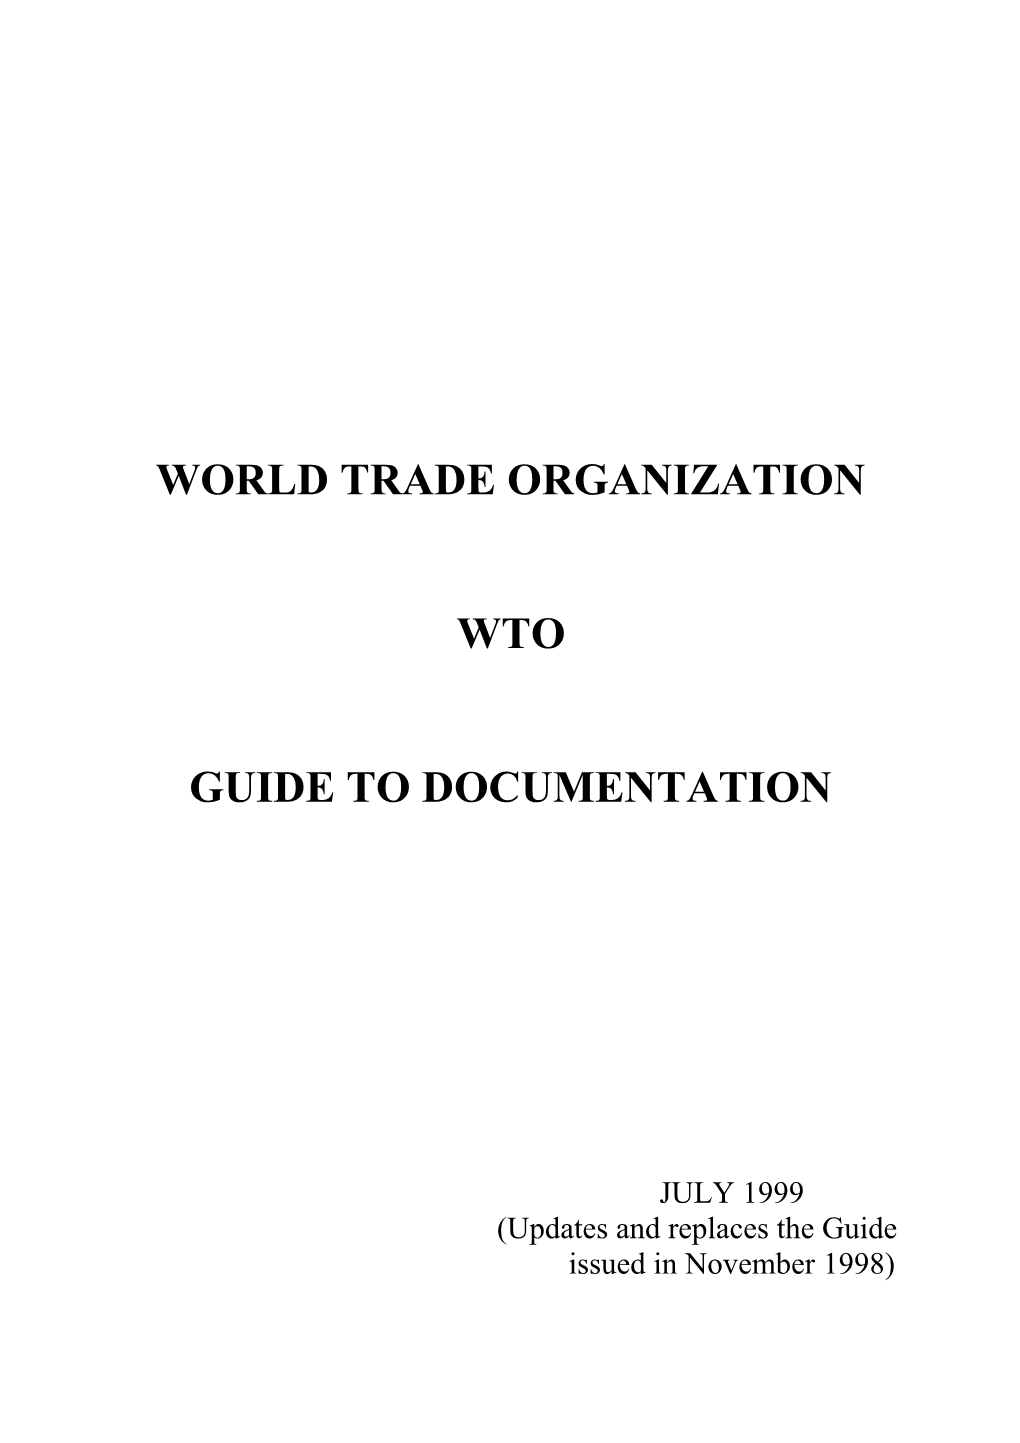 World Trade Organization s1